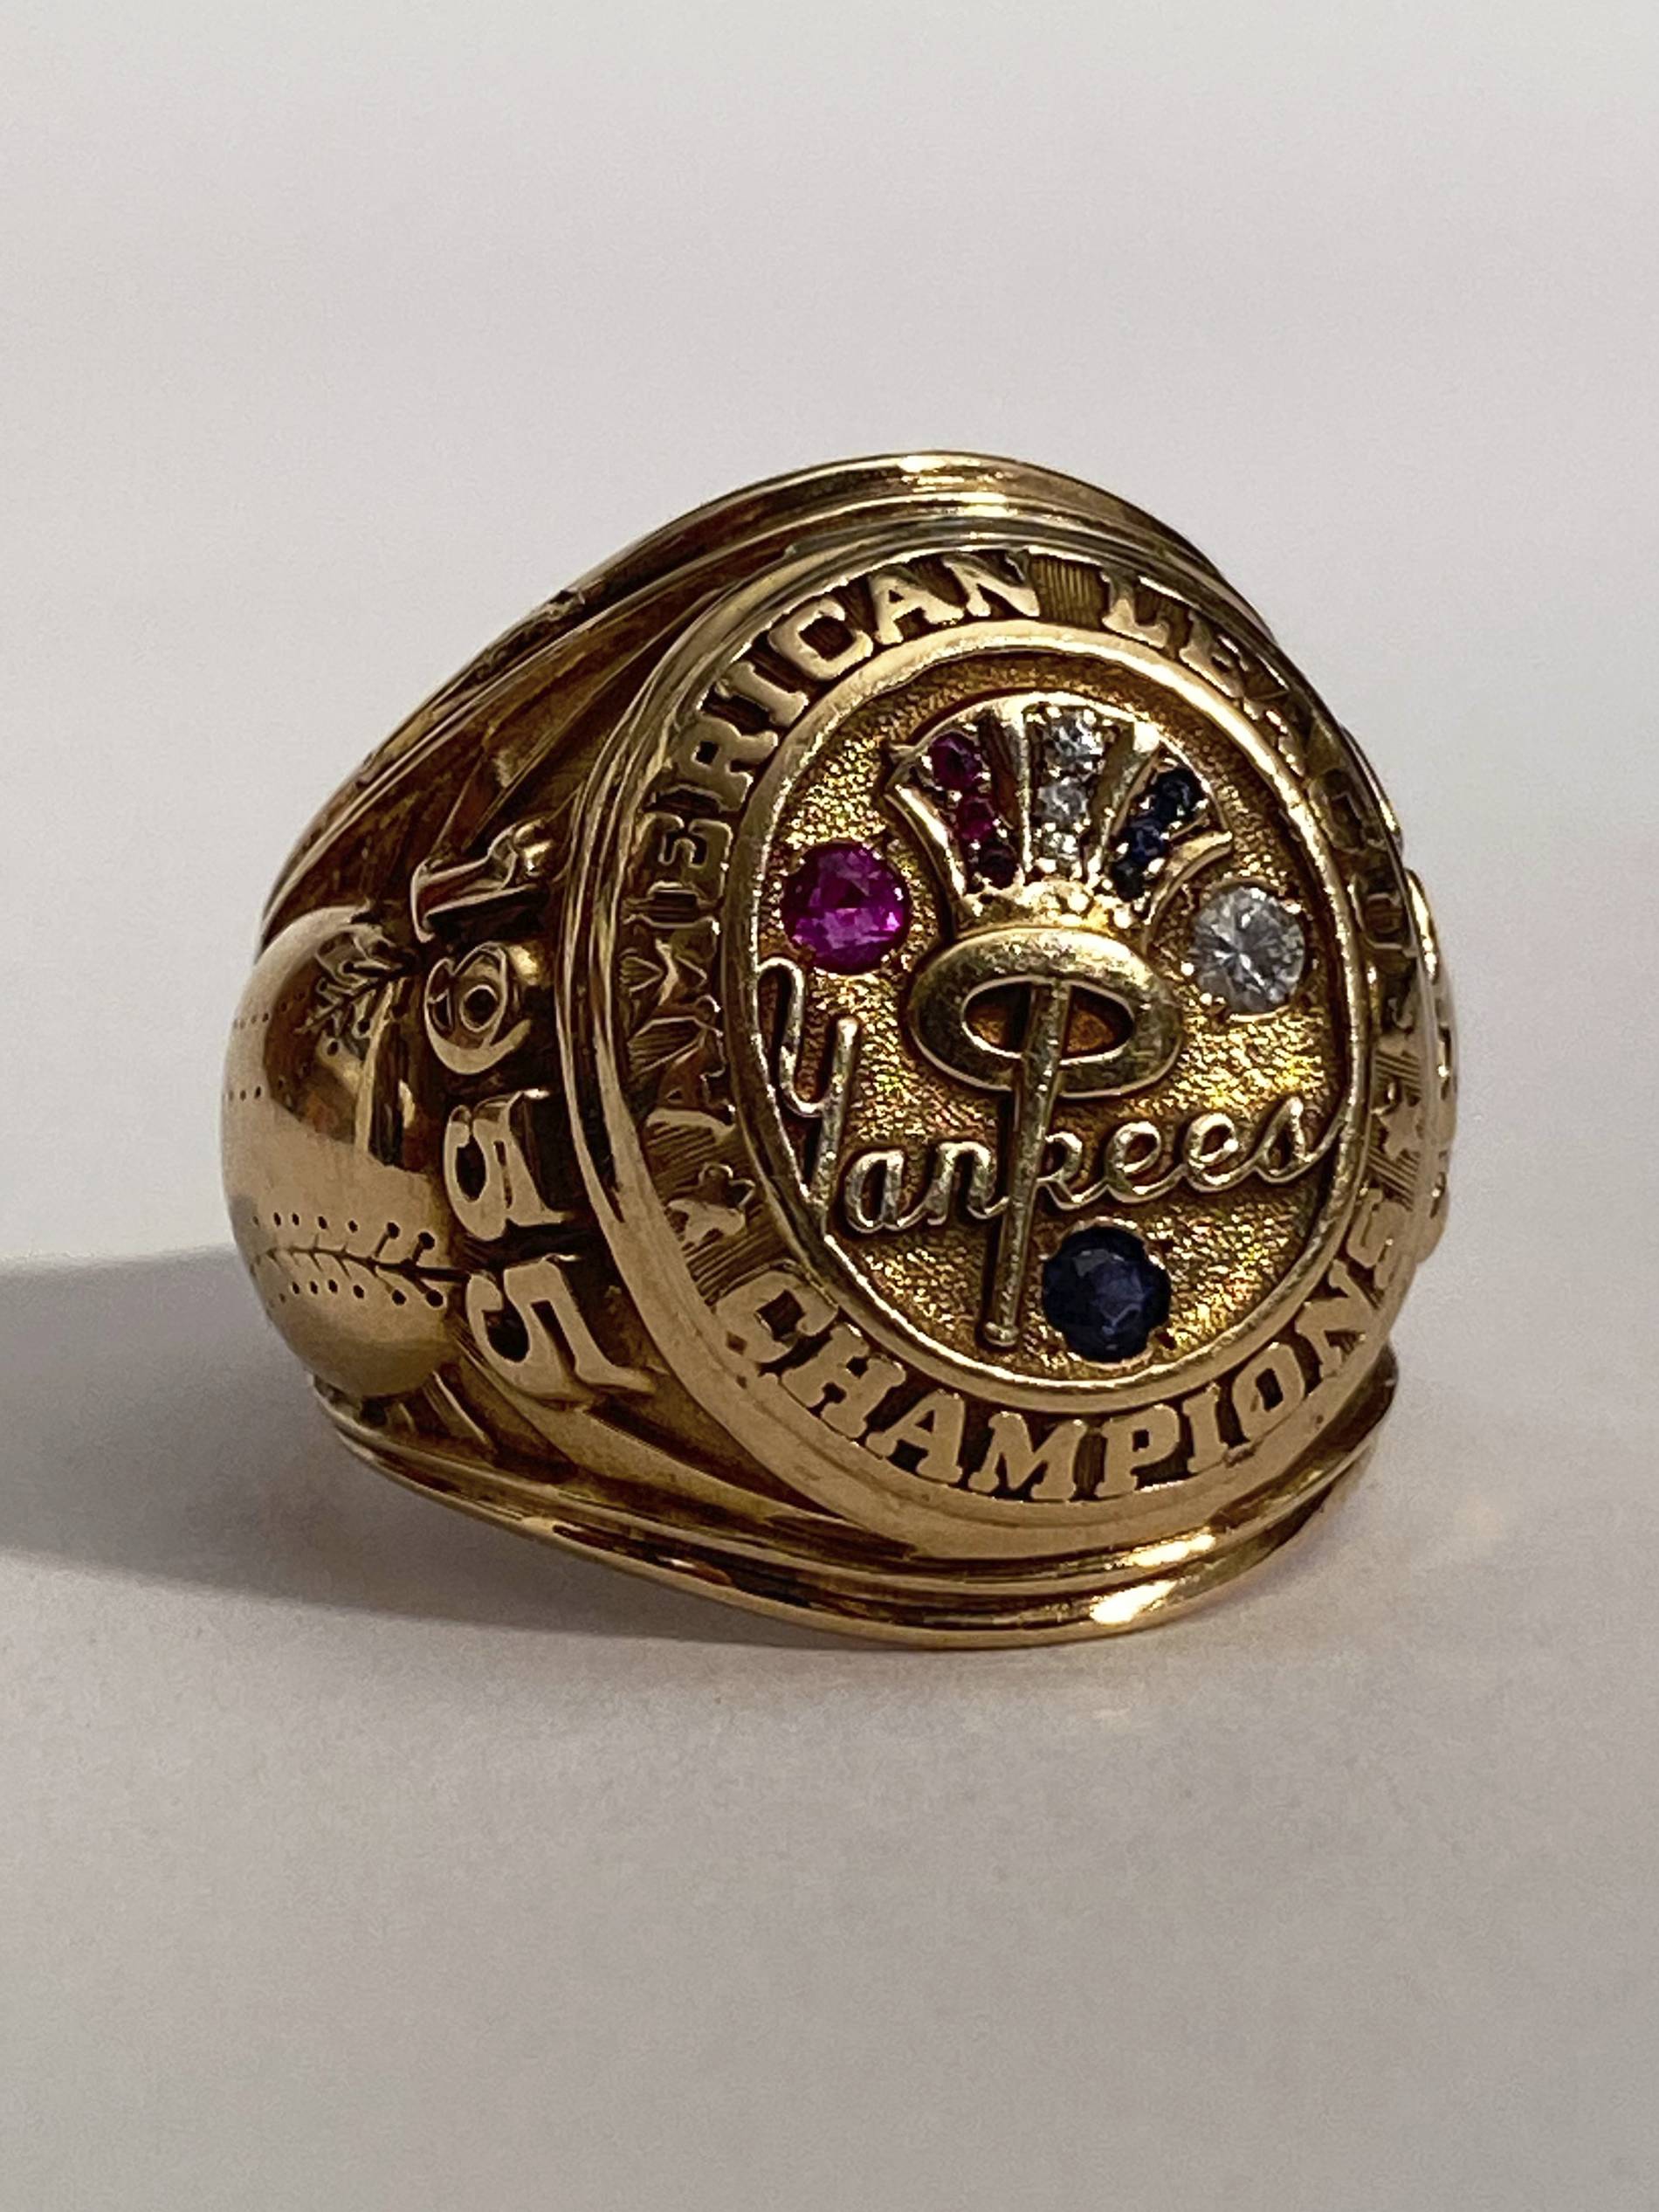 Mickey Mantle championship ring